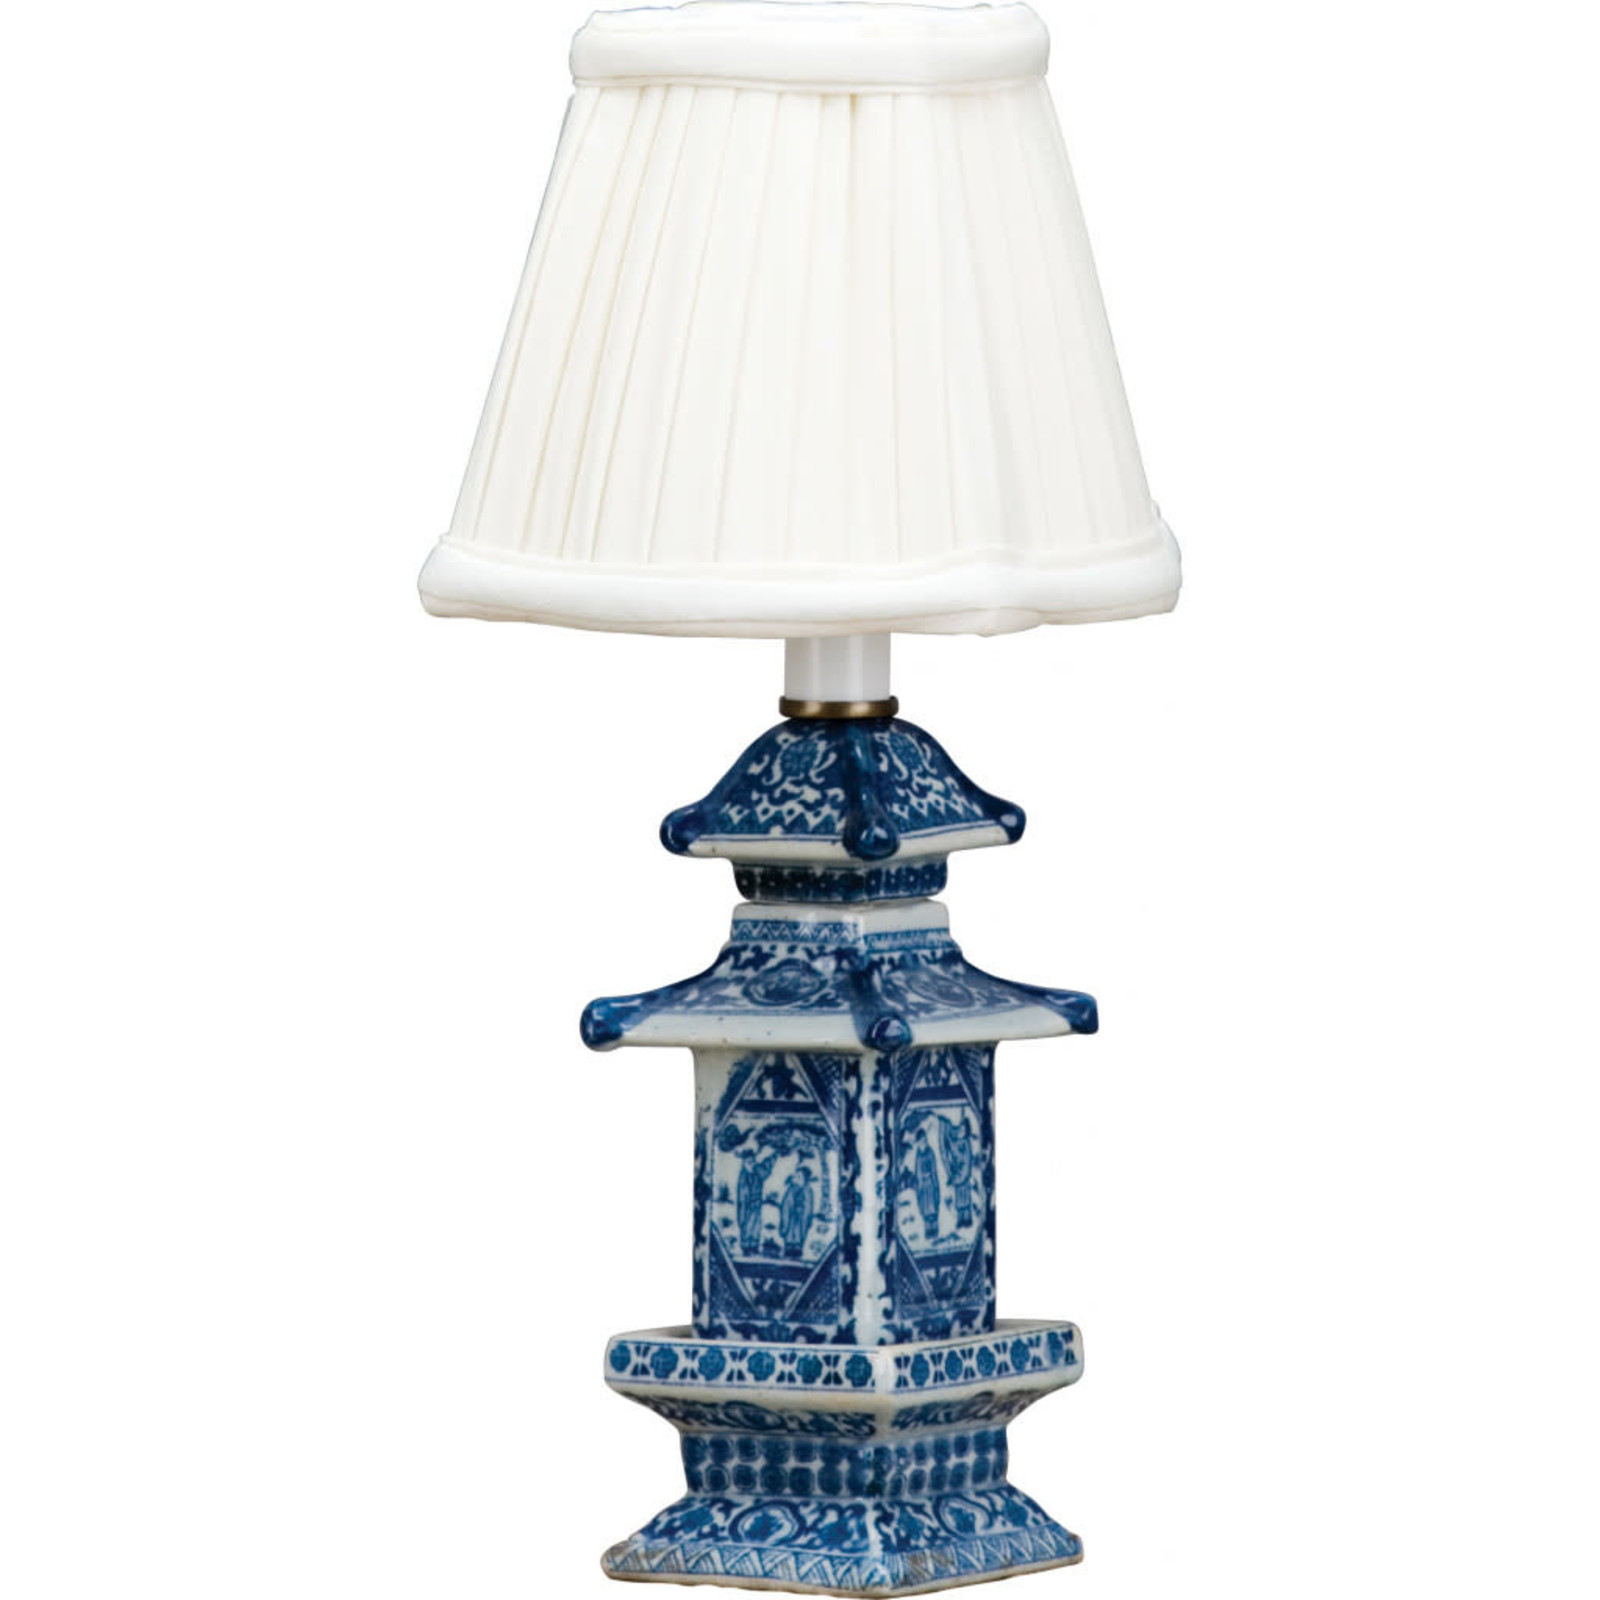 Danny's Fine Porcelain BLUE AND WHITE PAGODA PETITE LAMP    50409-L loading=